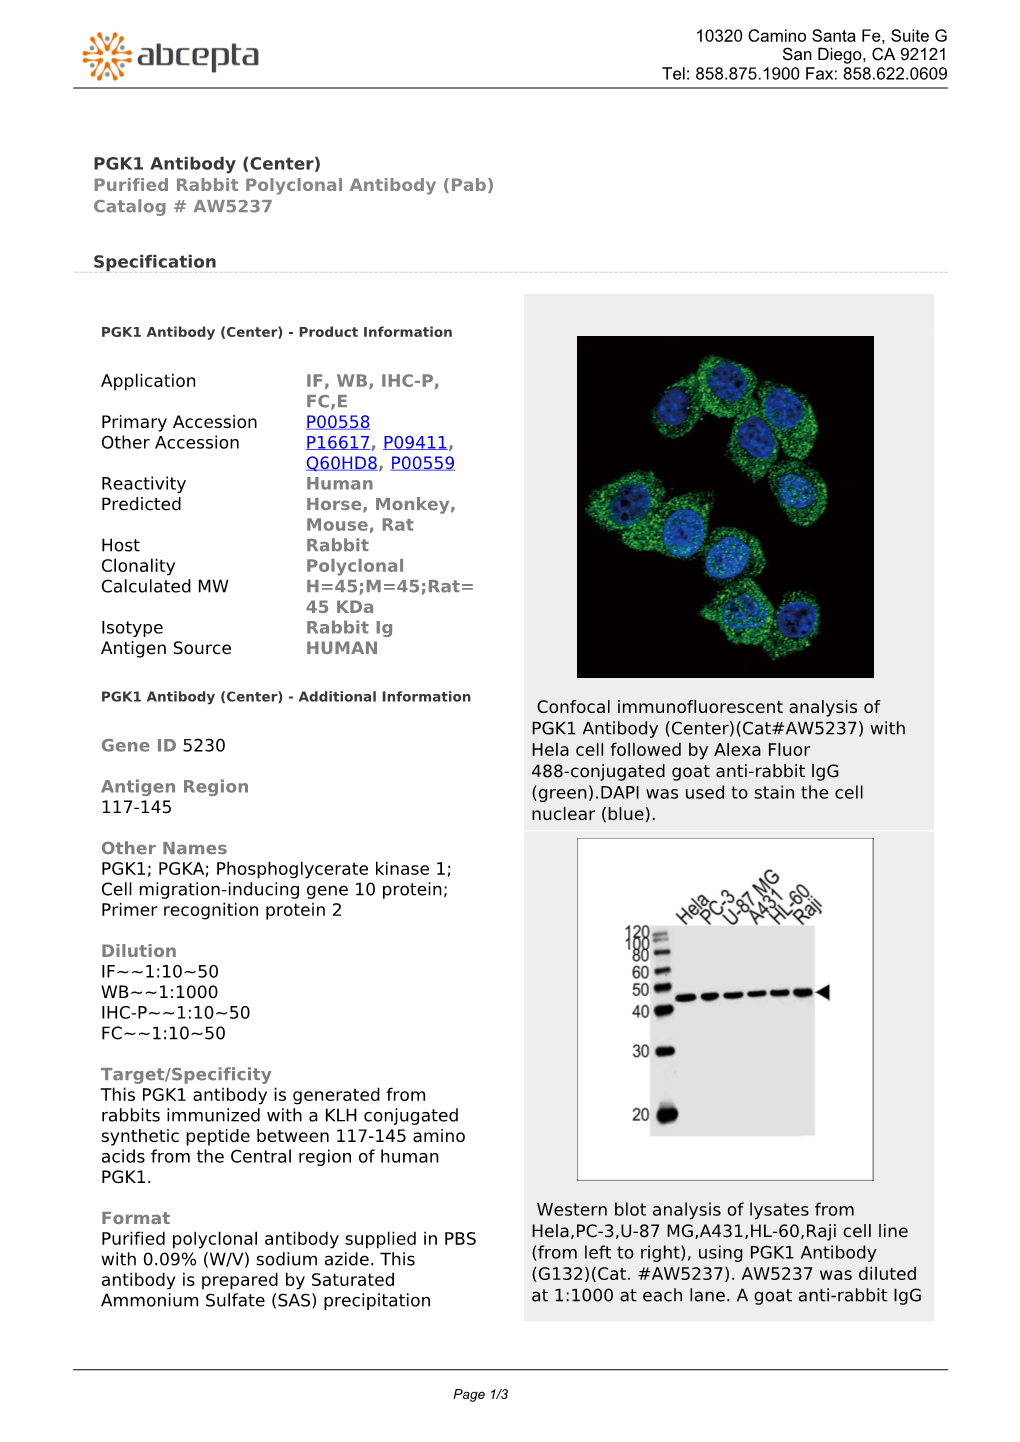 PGK1 Antibody (Center) Purified Rabbit Polyclonal Antibody (Pab) Catalog # AW5237